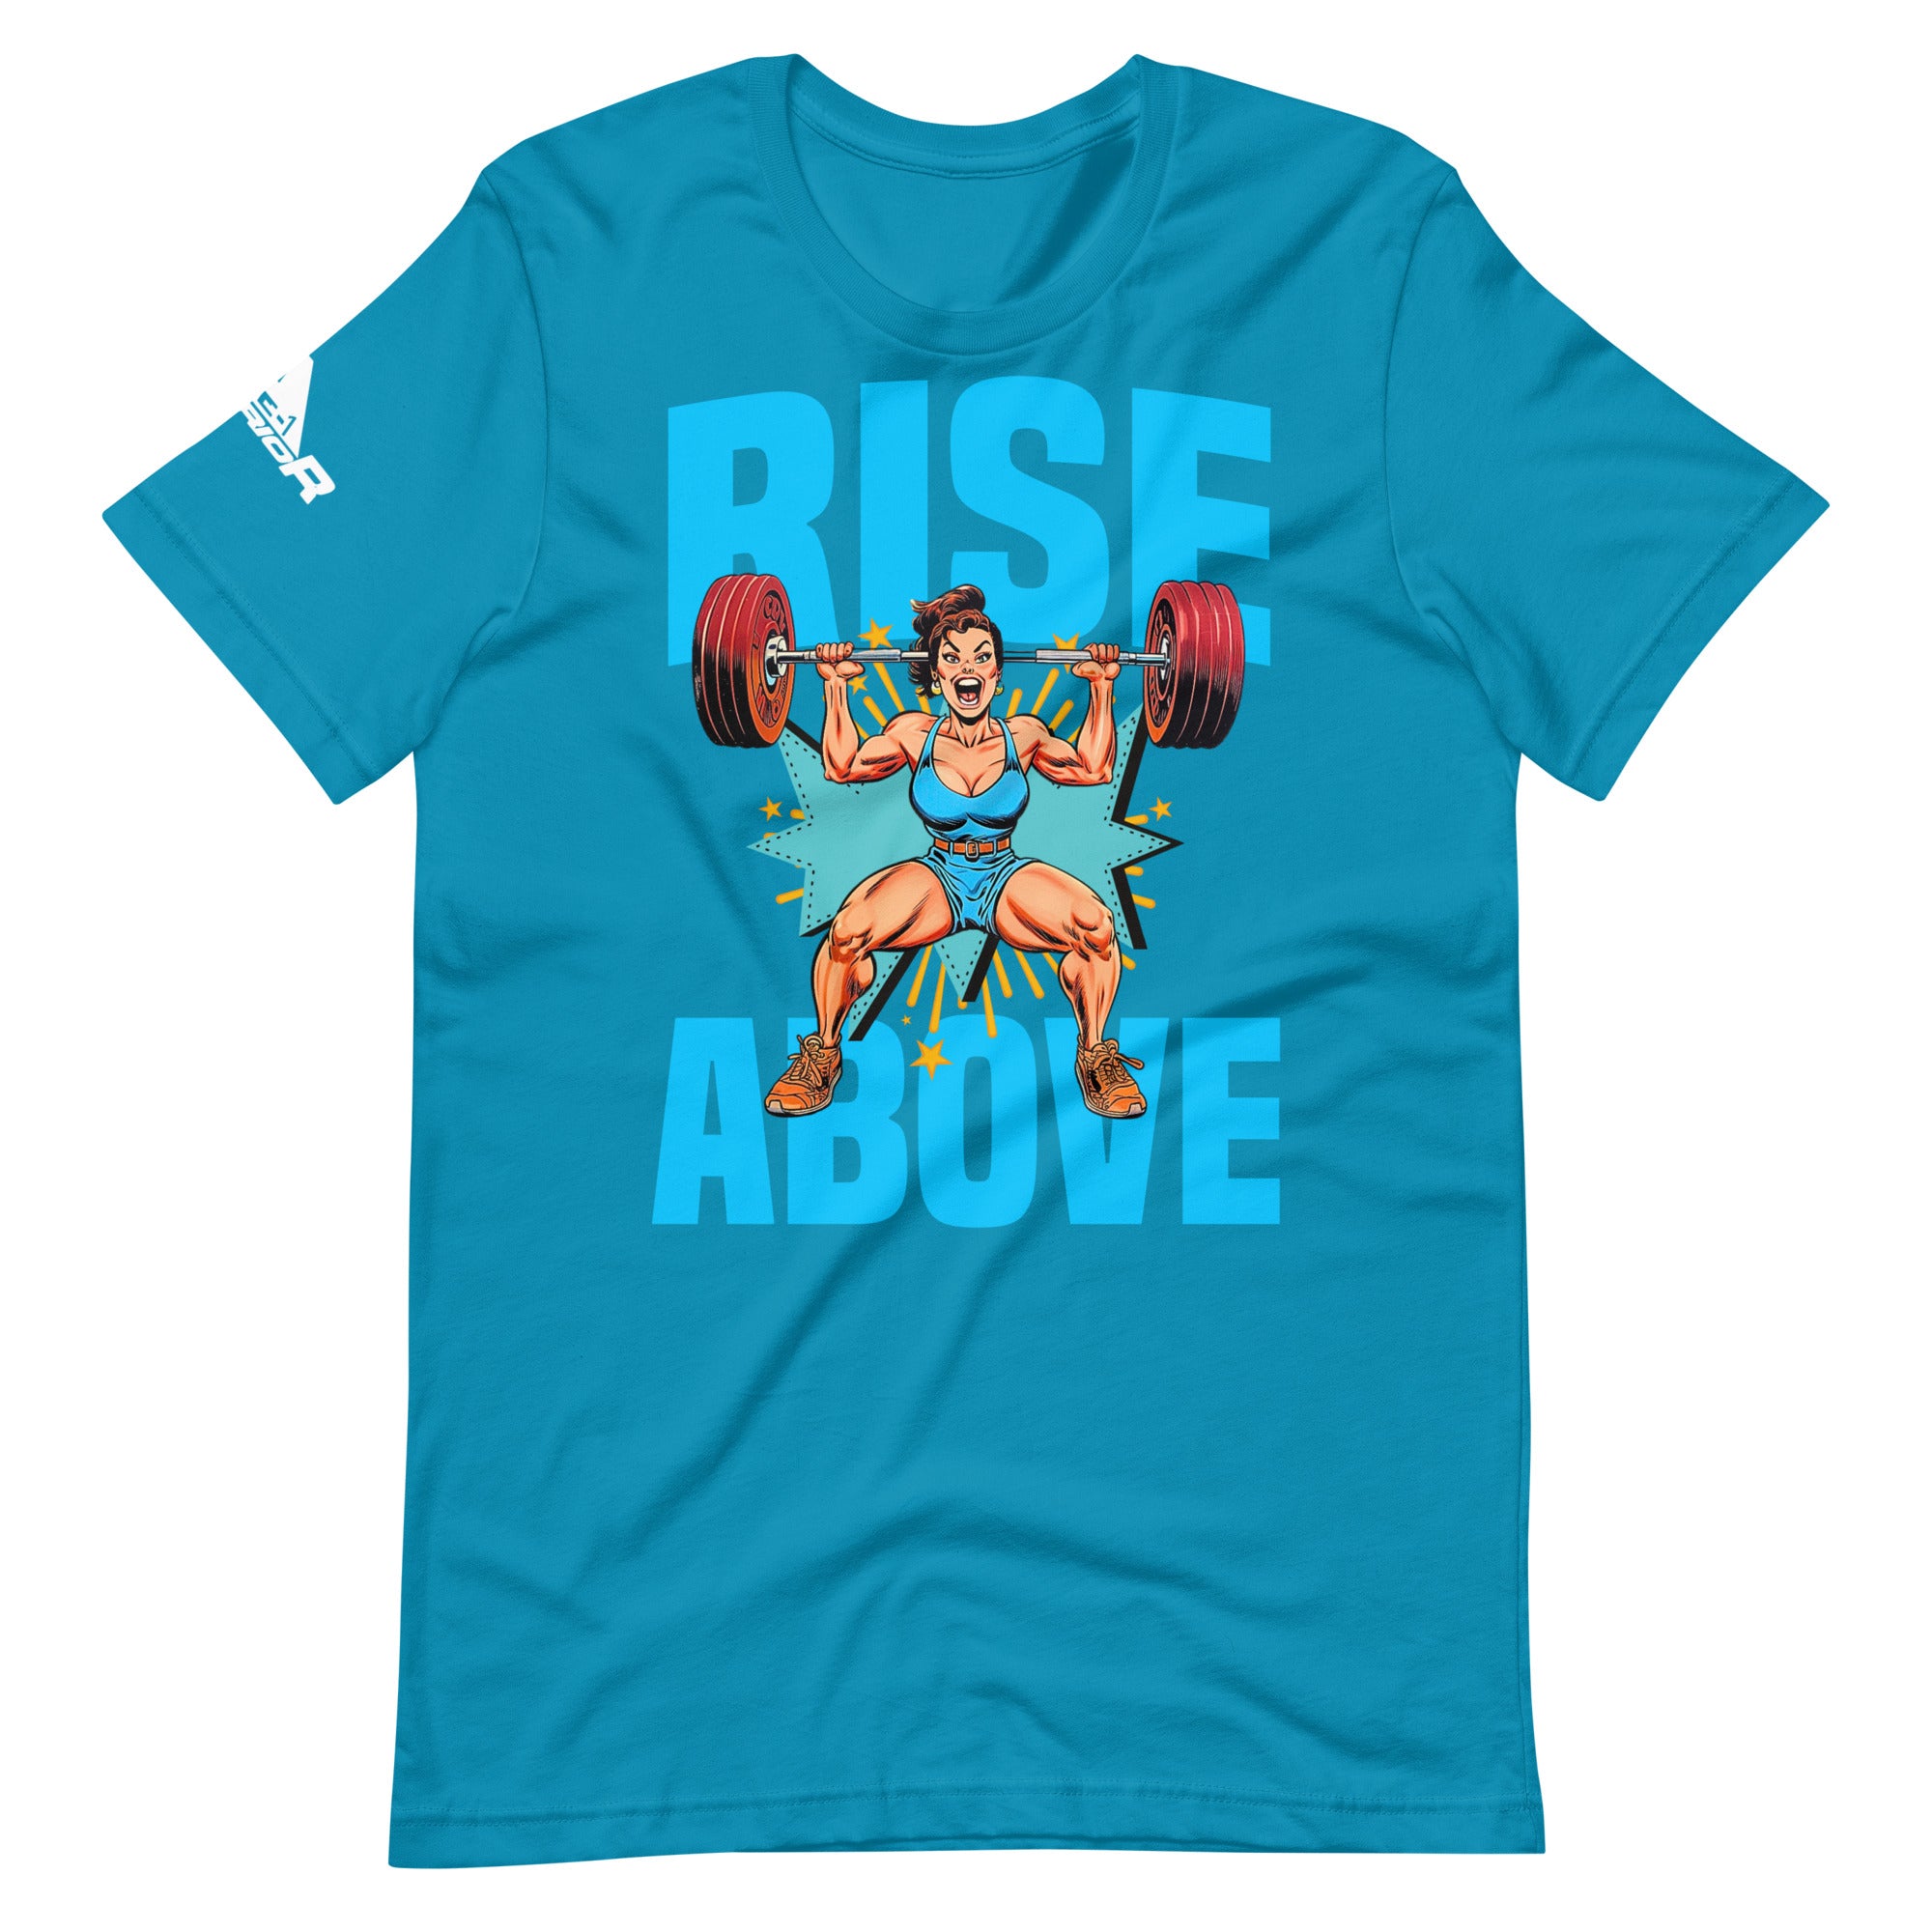 Women's Empowered "Rise Above" Unisex t-shirt